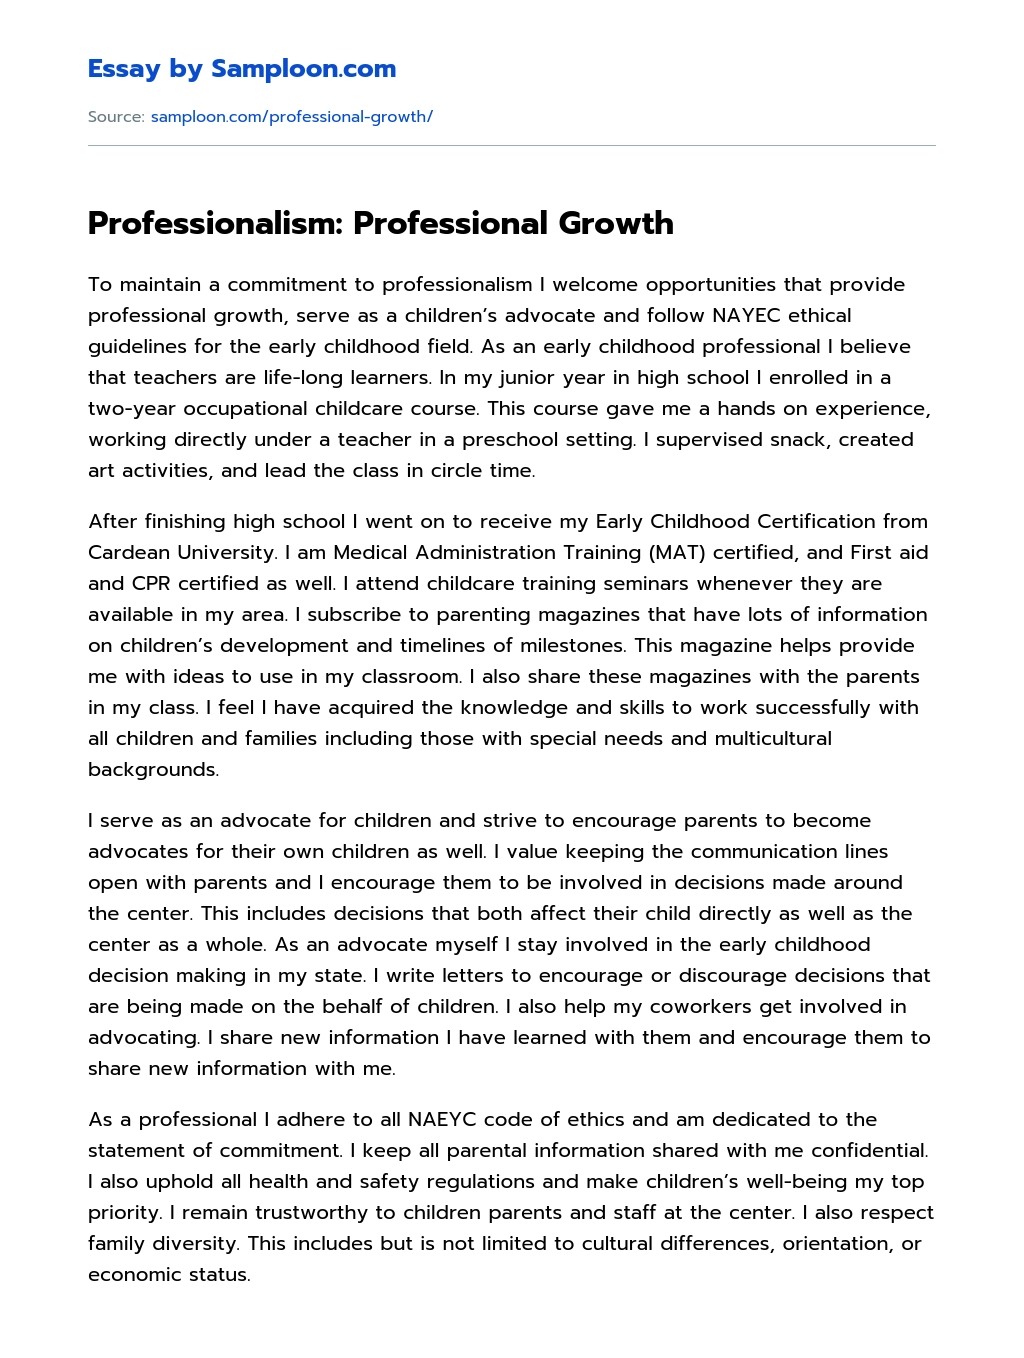 Professionalism: Professional Growth essay